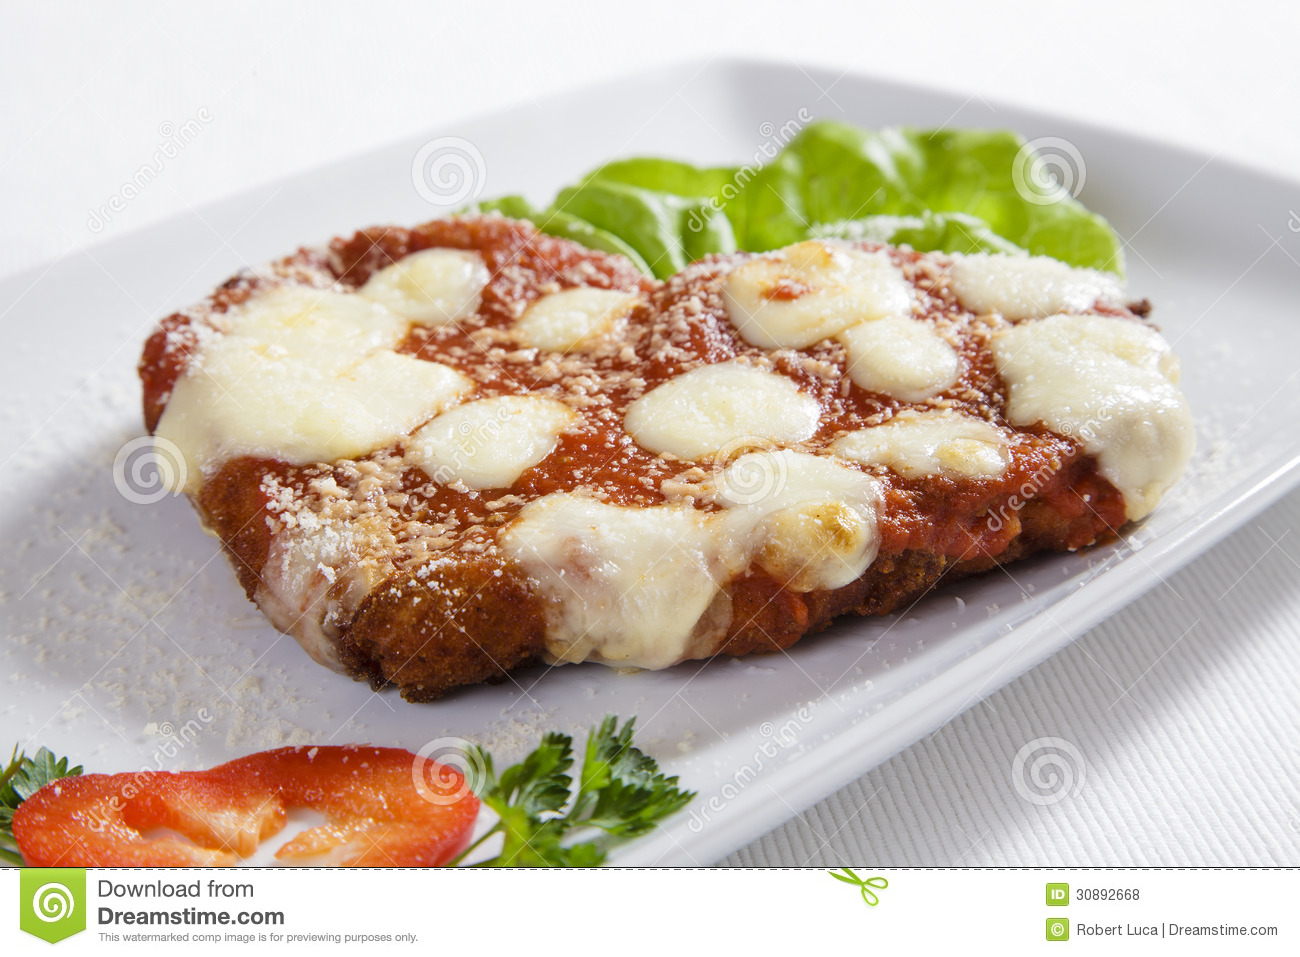 Chicken Parmesan Or Parmigiana With Melting Mozzarella And Parmesan